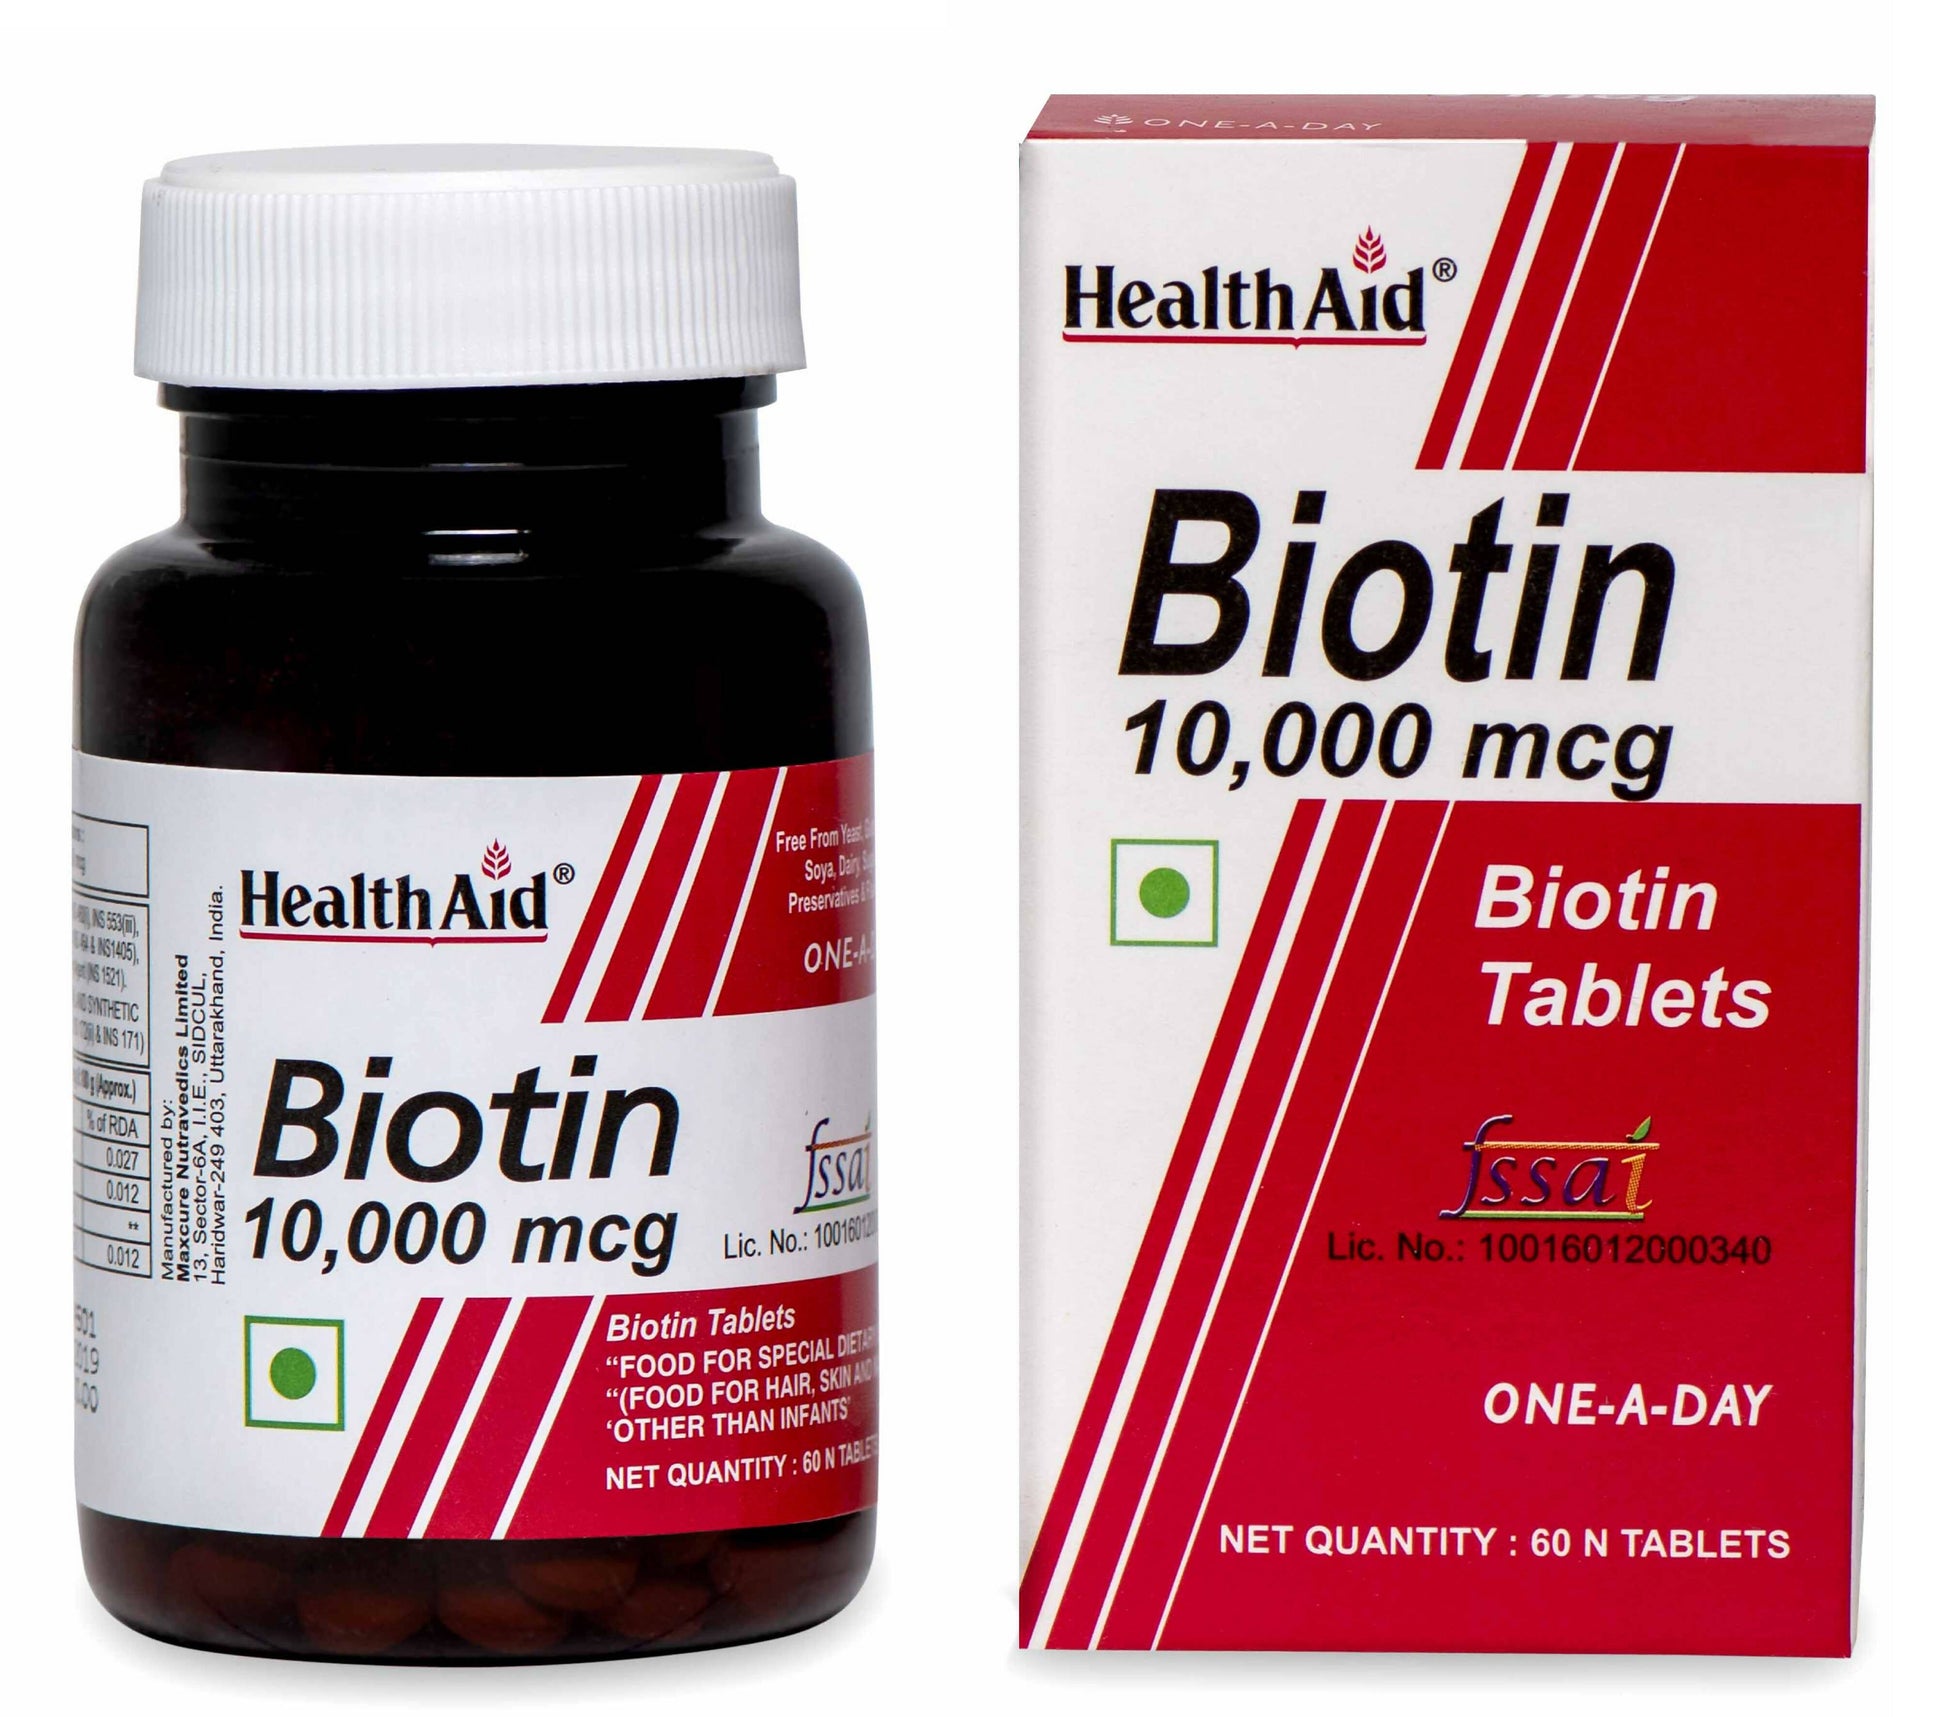 HealthAid Biotin 10000 mcg Tablets - BUDEN